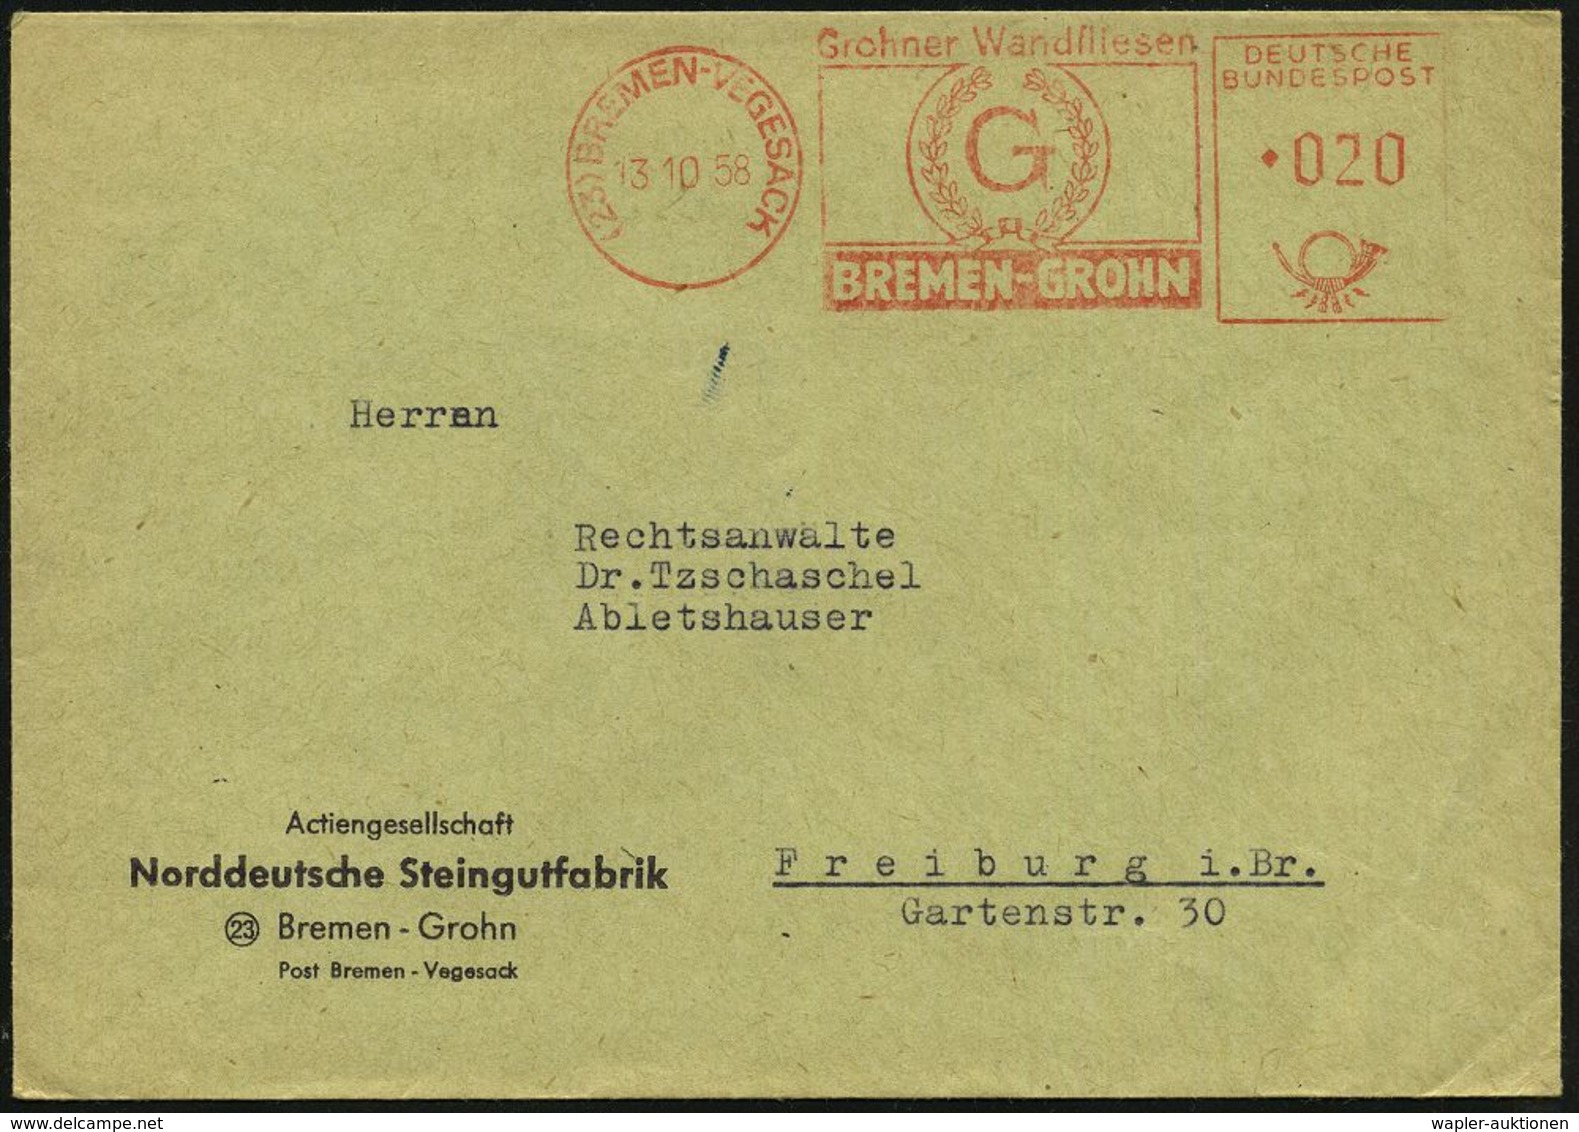 TON / STEINGUT / KACHELOFEN : (23) BREMEN-VEGESACK/ Grohner Wandfliesen 1958 (13.10.) AFS (Logo) Firmen-Bf: Norddeutsche - Porcelain